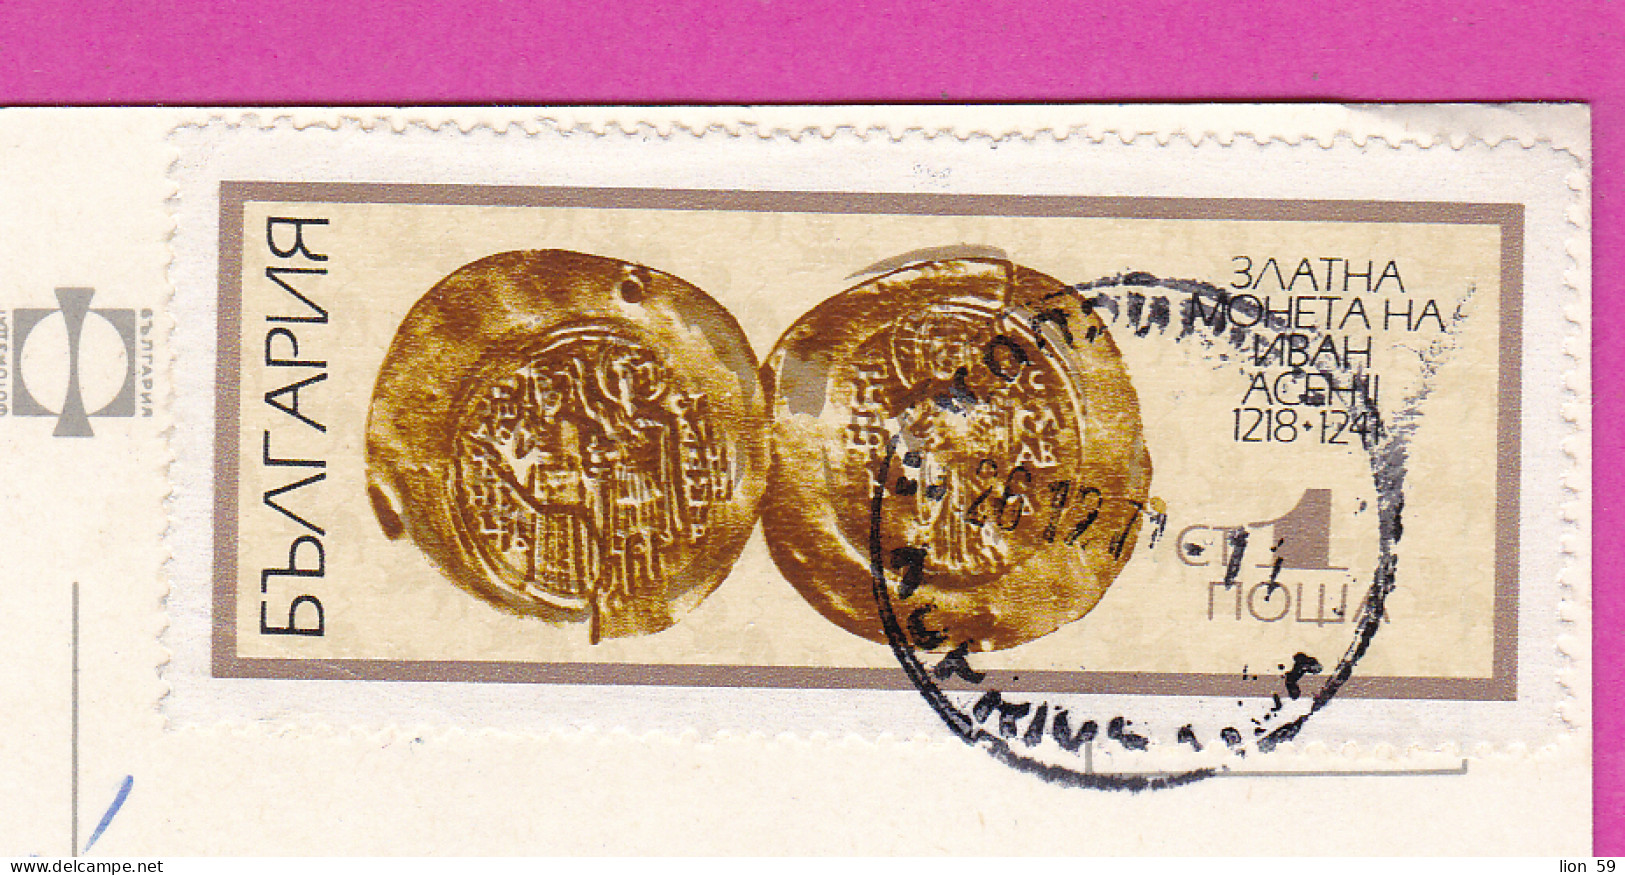 310635 / Bulgaria - Koprivshtitsa - Museum Old "Markov House" PC 1971 USED 1 St. Gold Coin Of Ivan Asen 1218-1241 - Storia Postale